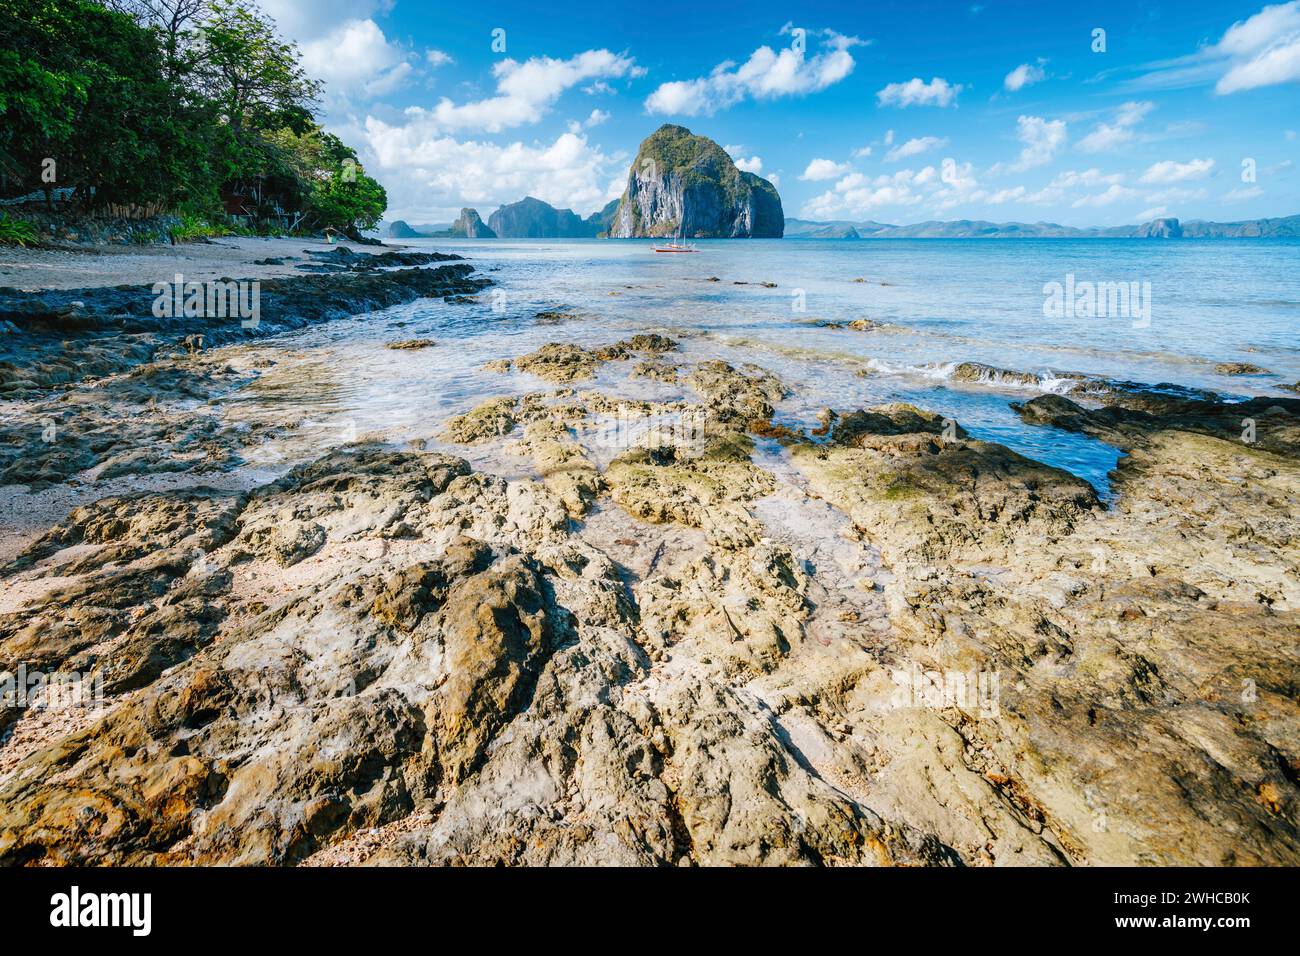 Seascape of tropical Pinagbuyutan island. Dreamlike landscape scenery at El Nido, Palawan, Philippines. Stock Photo